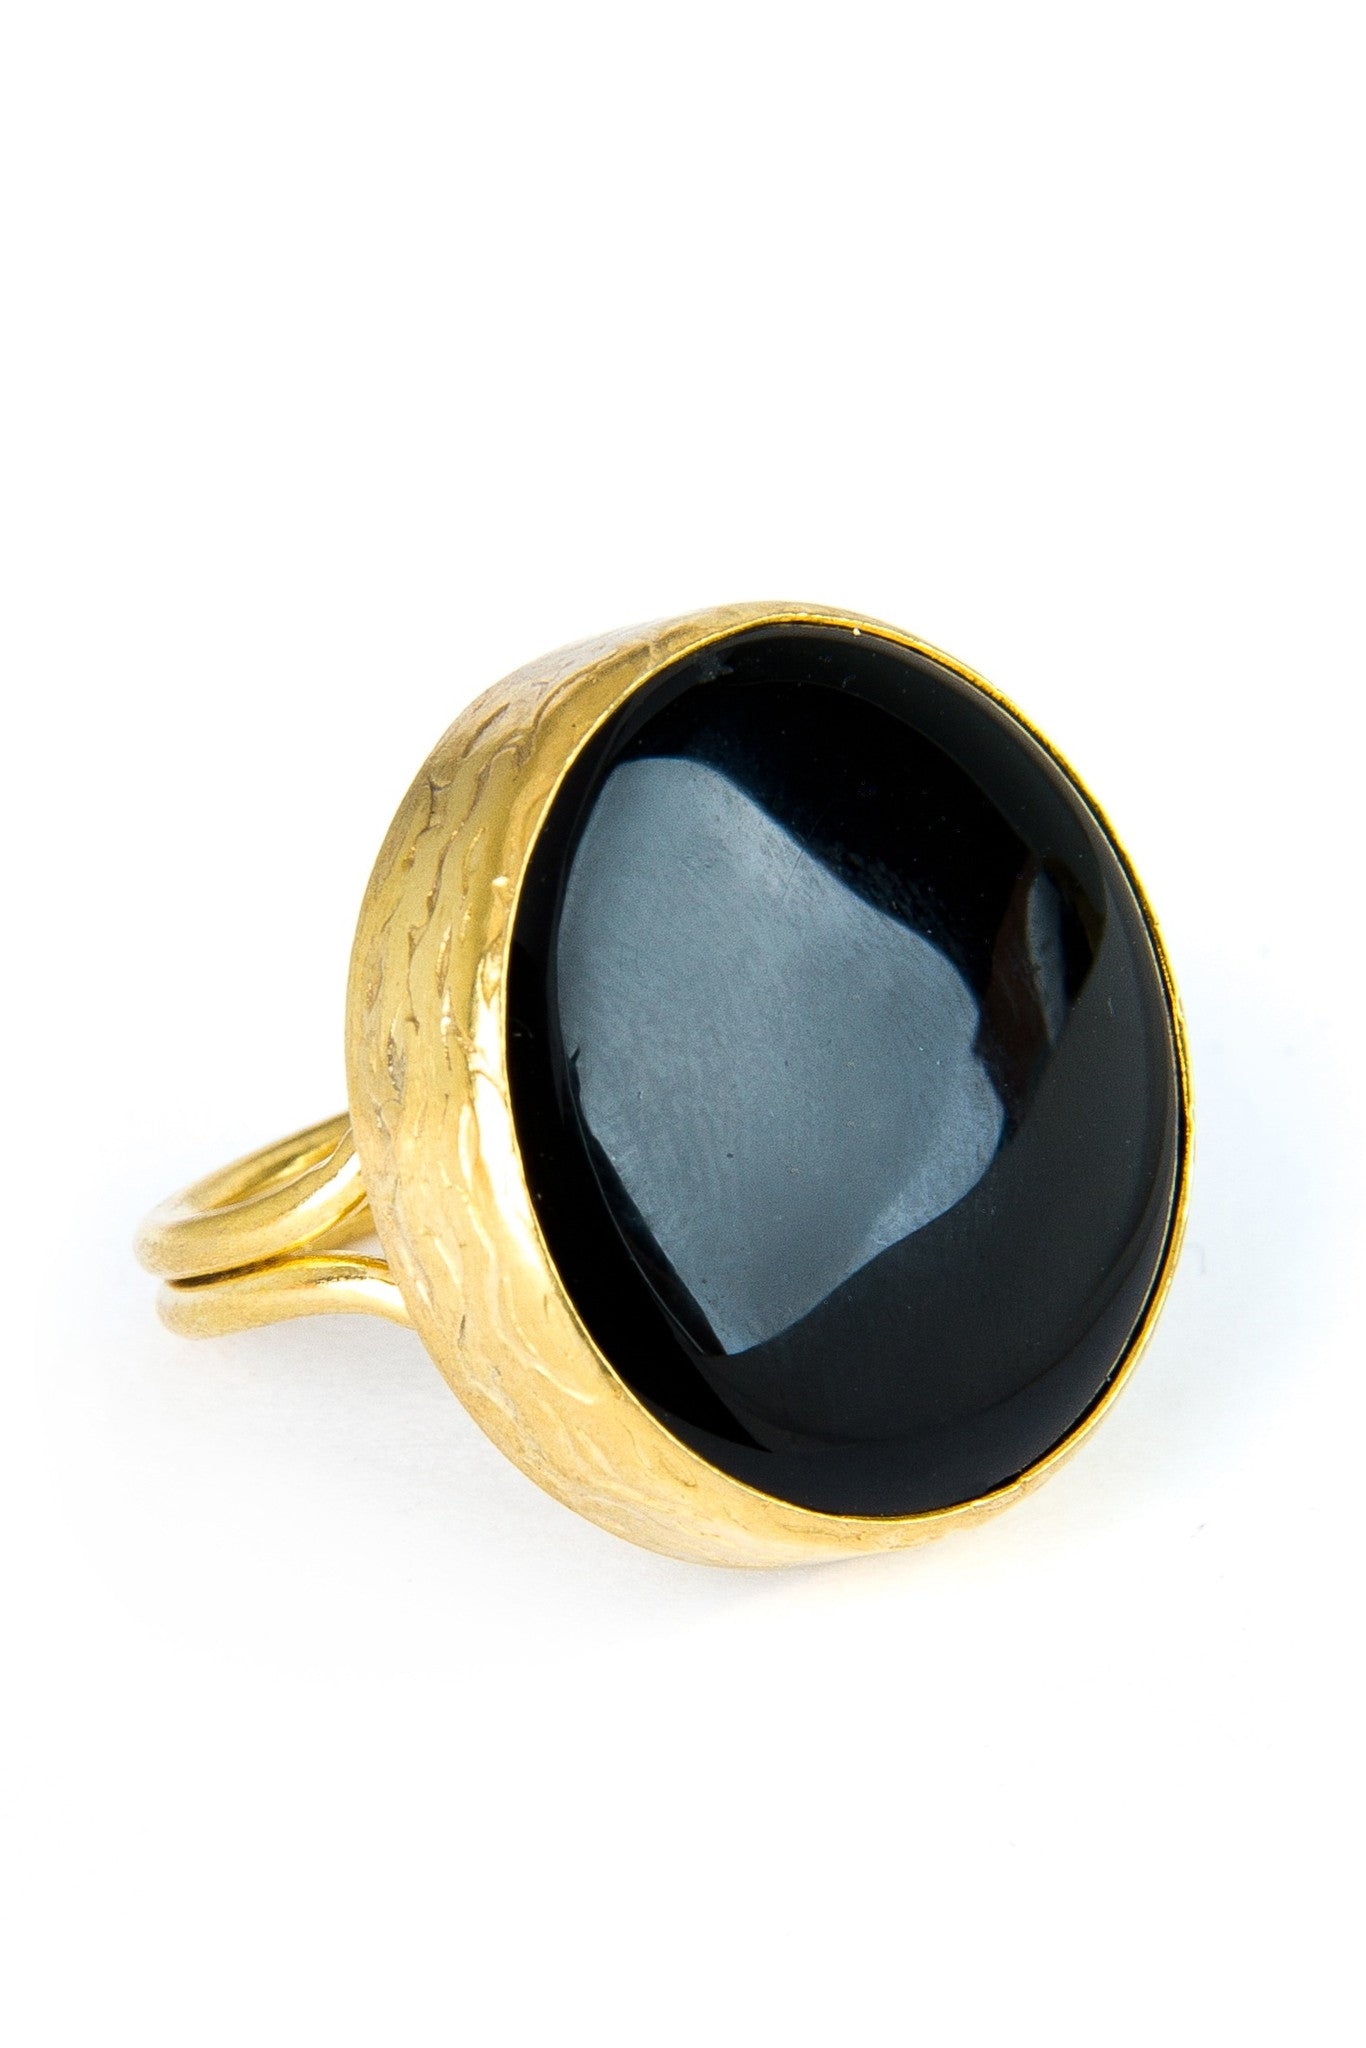 Black Onyx Gemstone Gold Ring - Lulugem.com